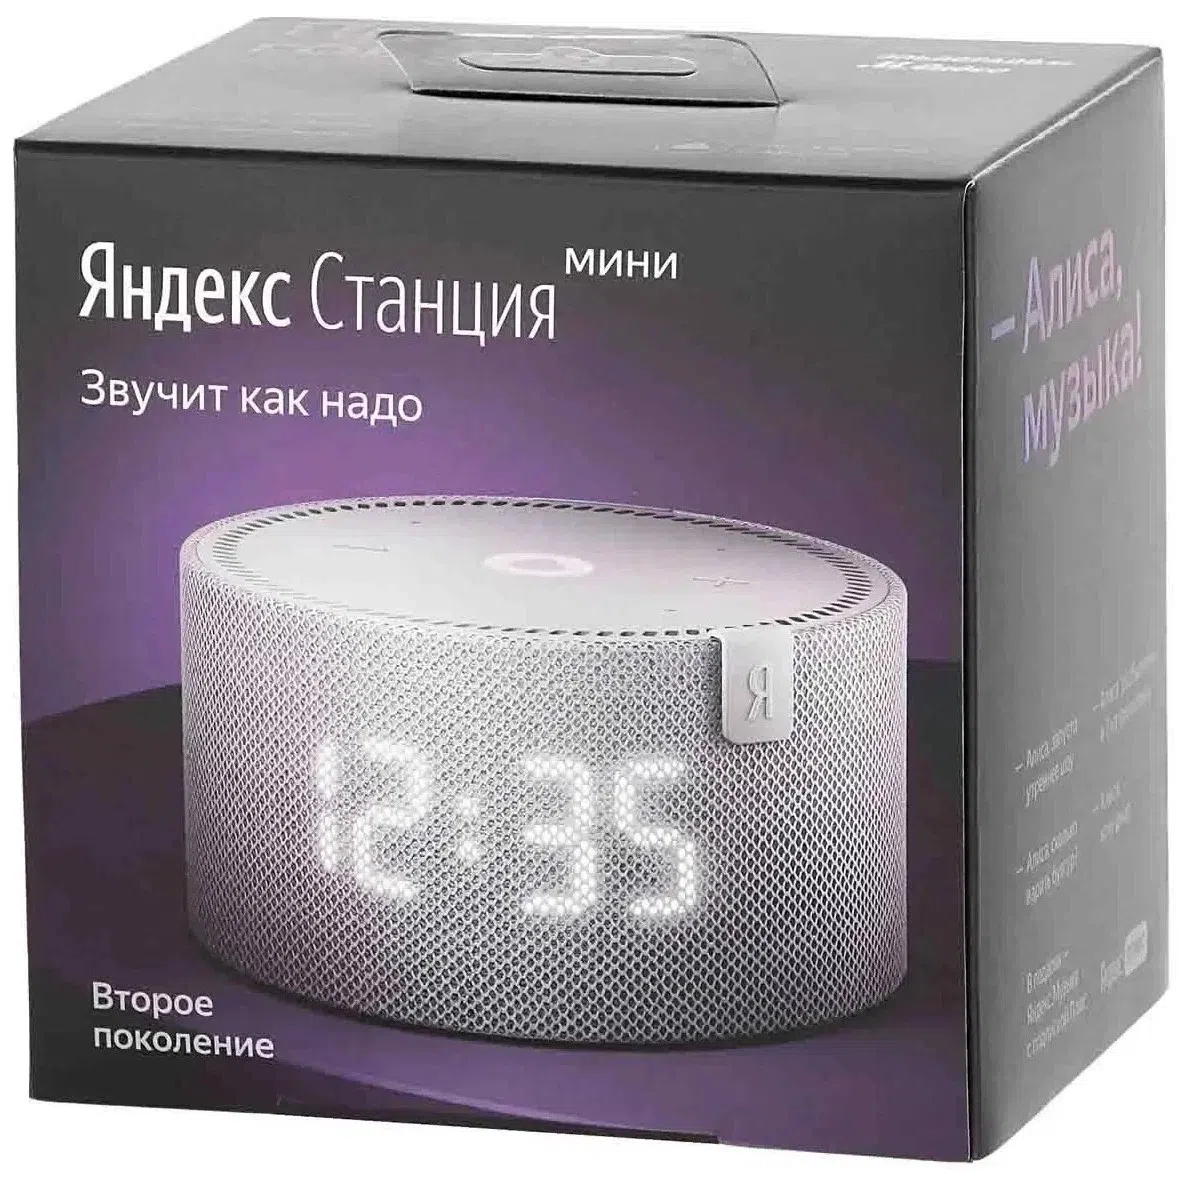 Yandex Station MINI (Clock) / with Alisa / 10W / Gray